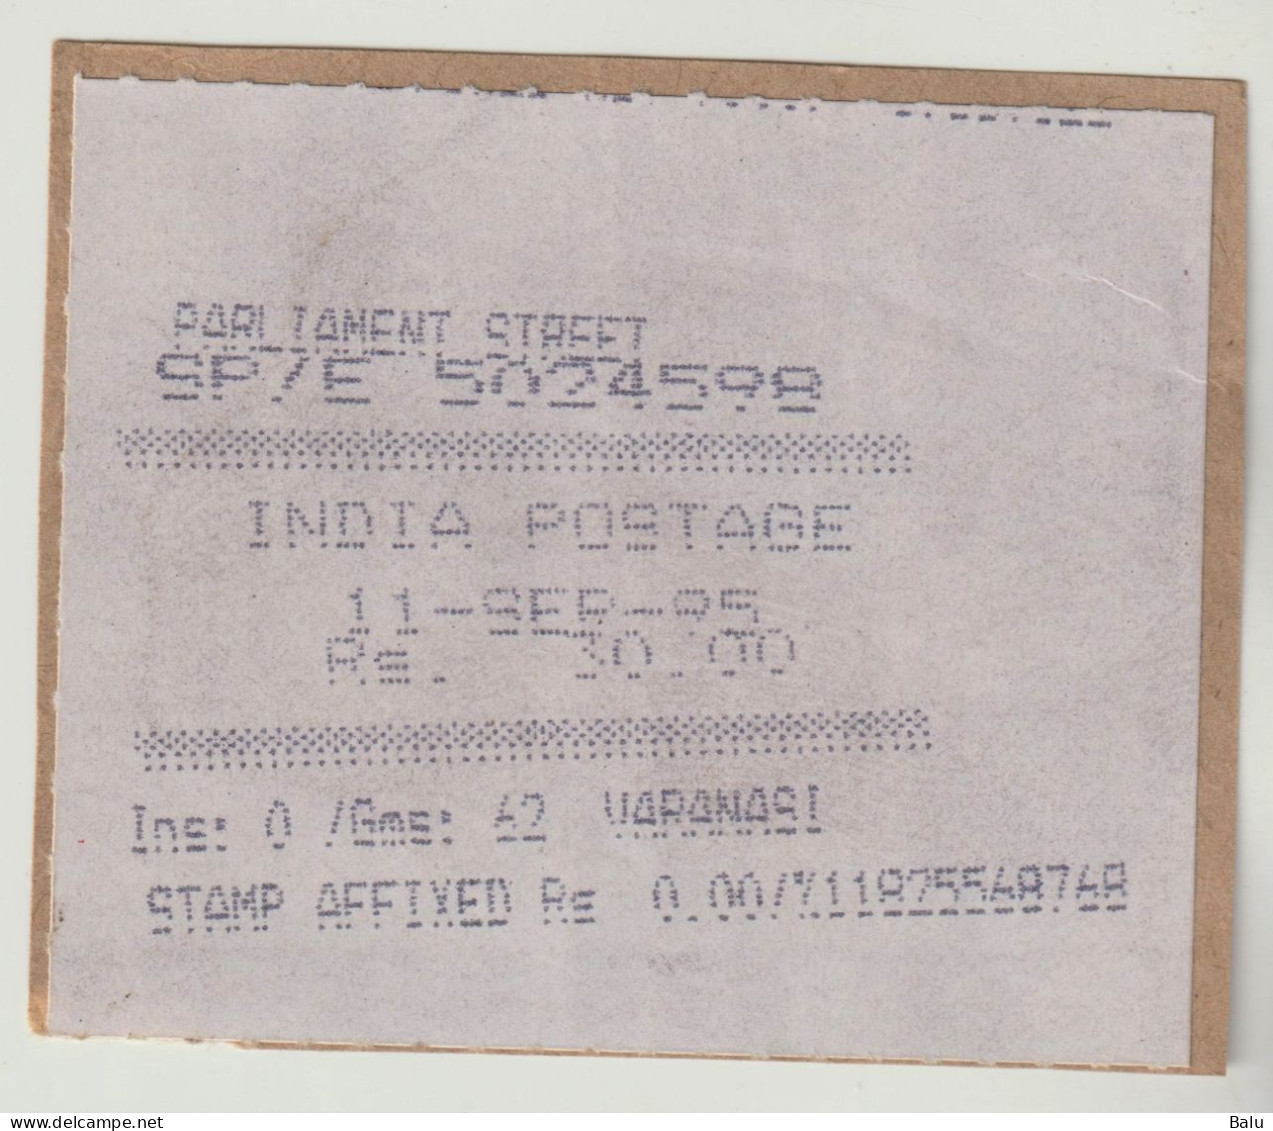 Indien India Postage Rs. 30.00 11-SEP-95 Parliament Street Varanasi "STAMP AFFIXED Rs" Auf Fragment - Usati